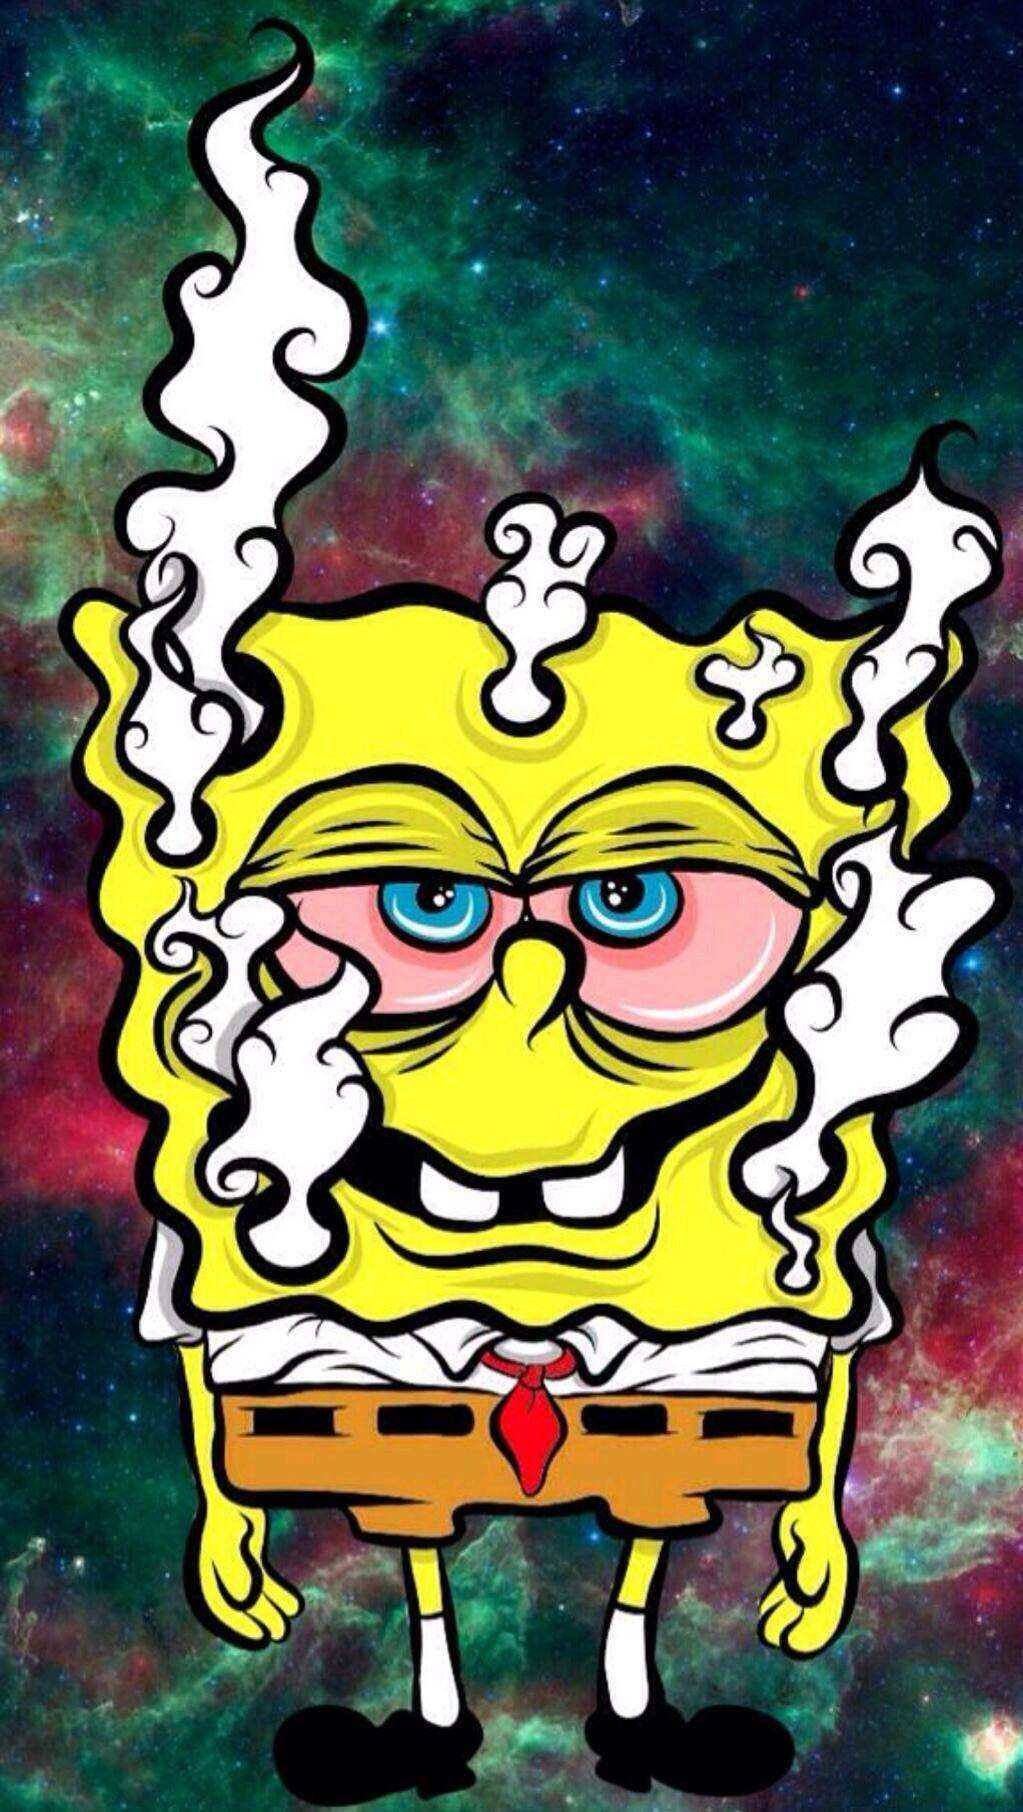 Spongebob Squarepants Patrickstar Wallpaper by th3MiruMiru on DeviantArt